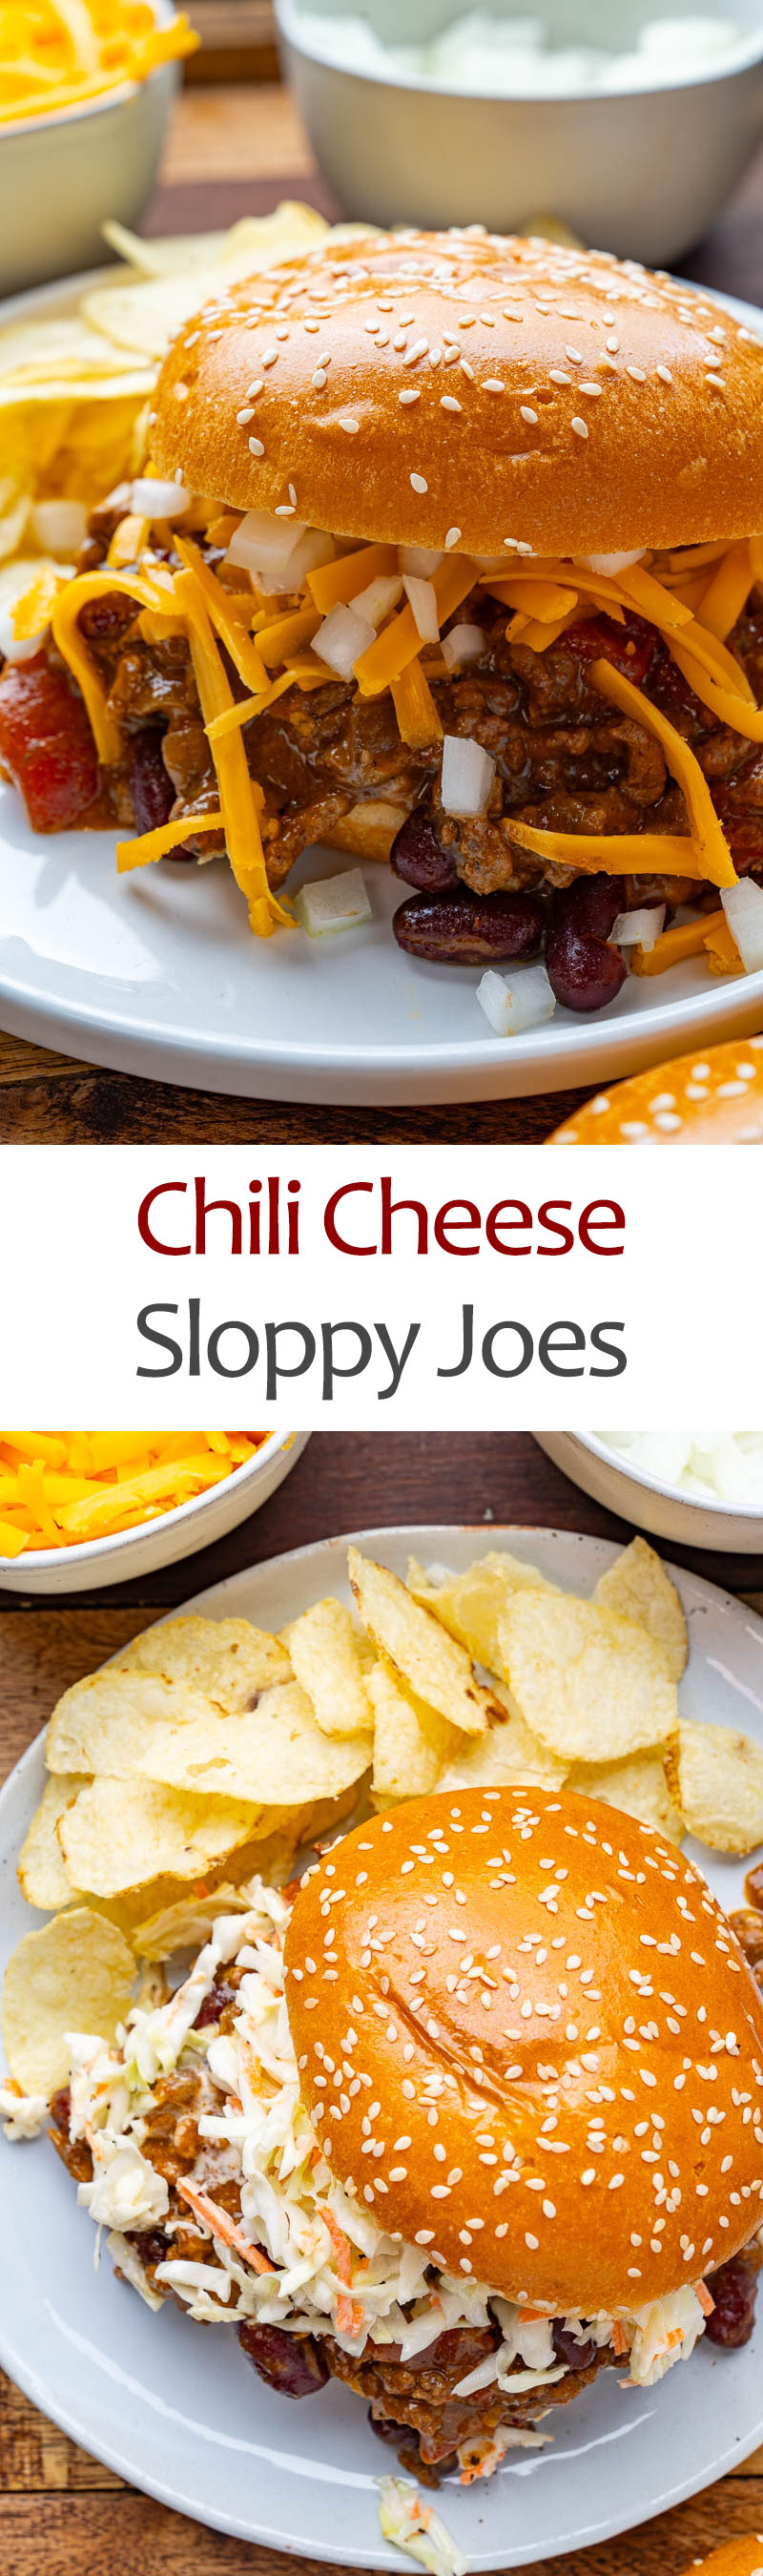 Chili Cheese Sloppy Joes